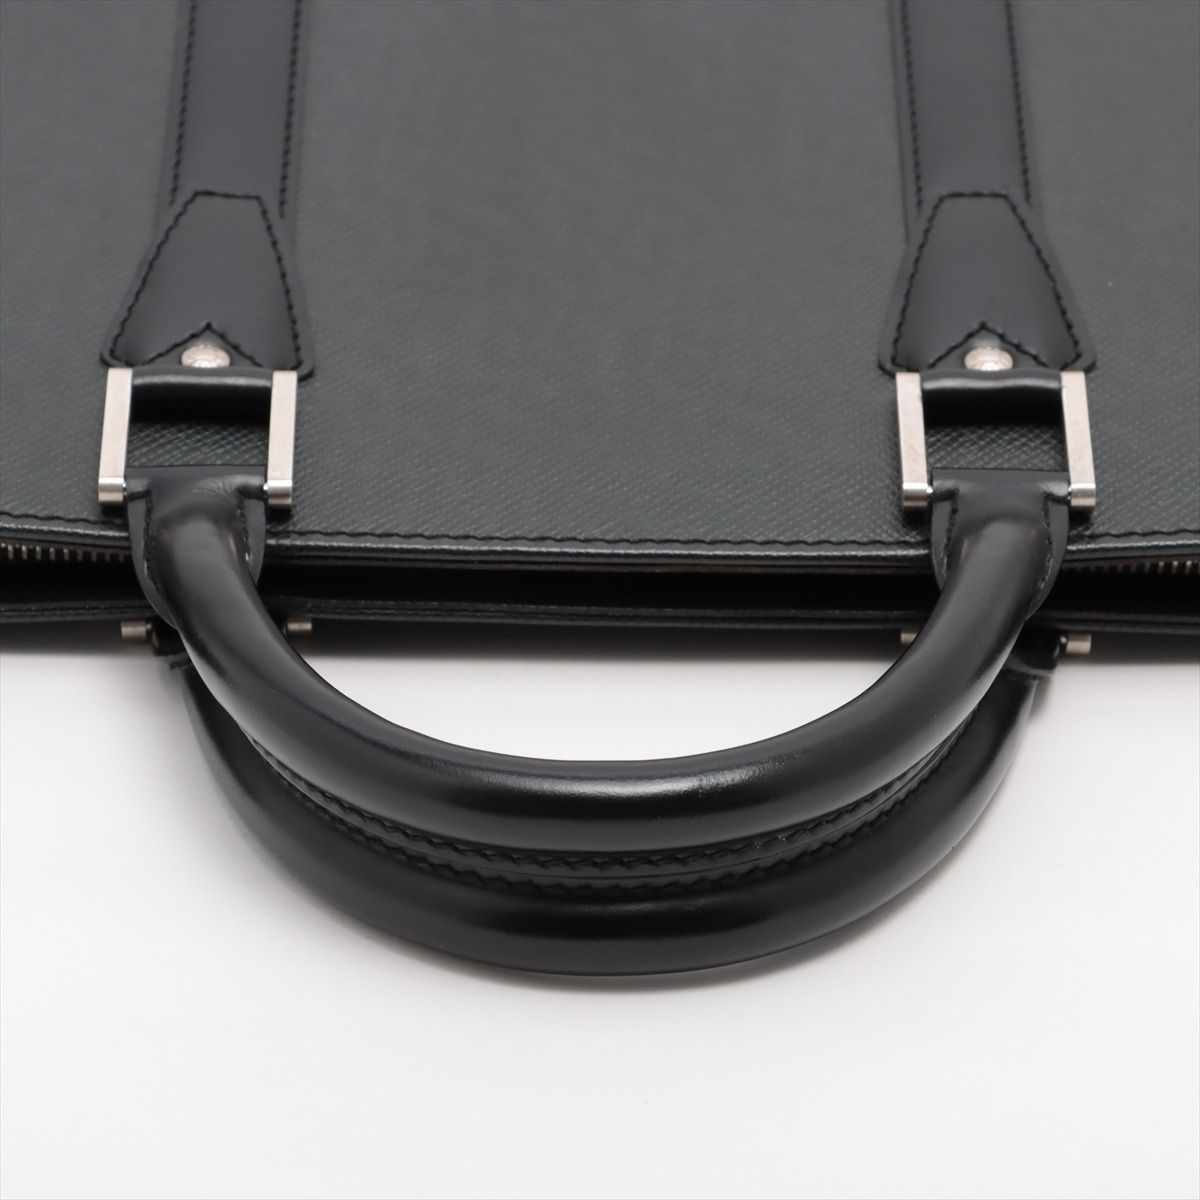 Louis Vuitton Taiga Porte Documents Lozan Business Bag M30052